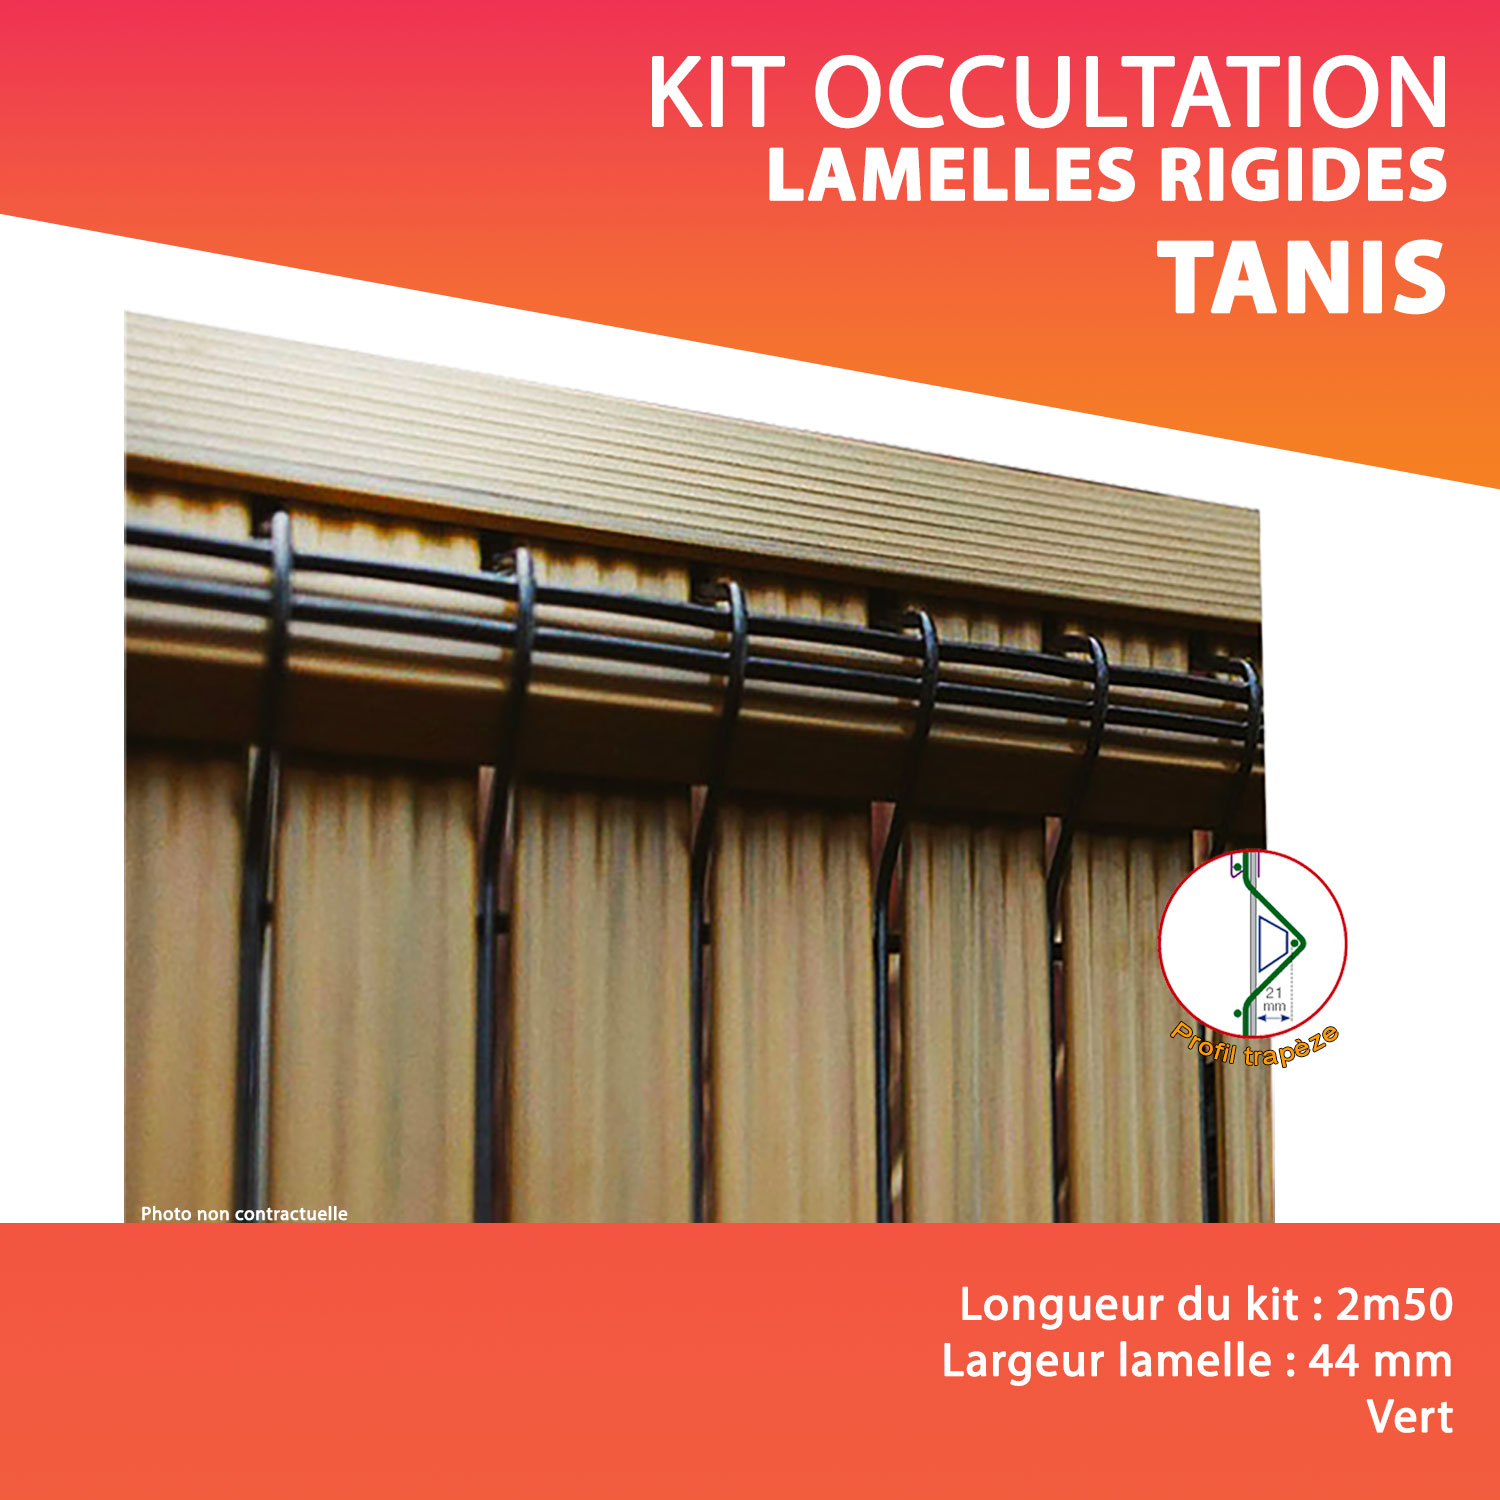 Kit TANIS lamelles rigides occultantes Lg. 2m50 Lg. lamelle 44 mm